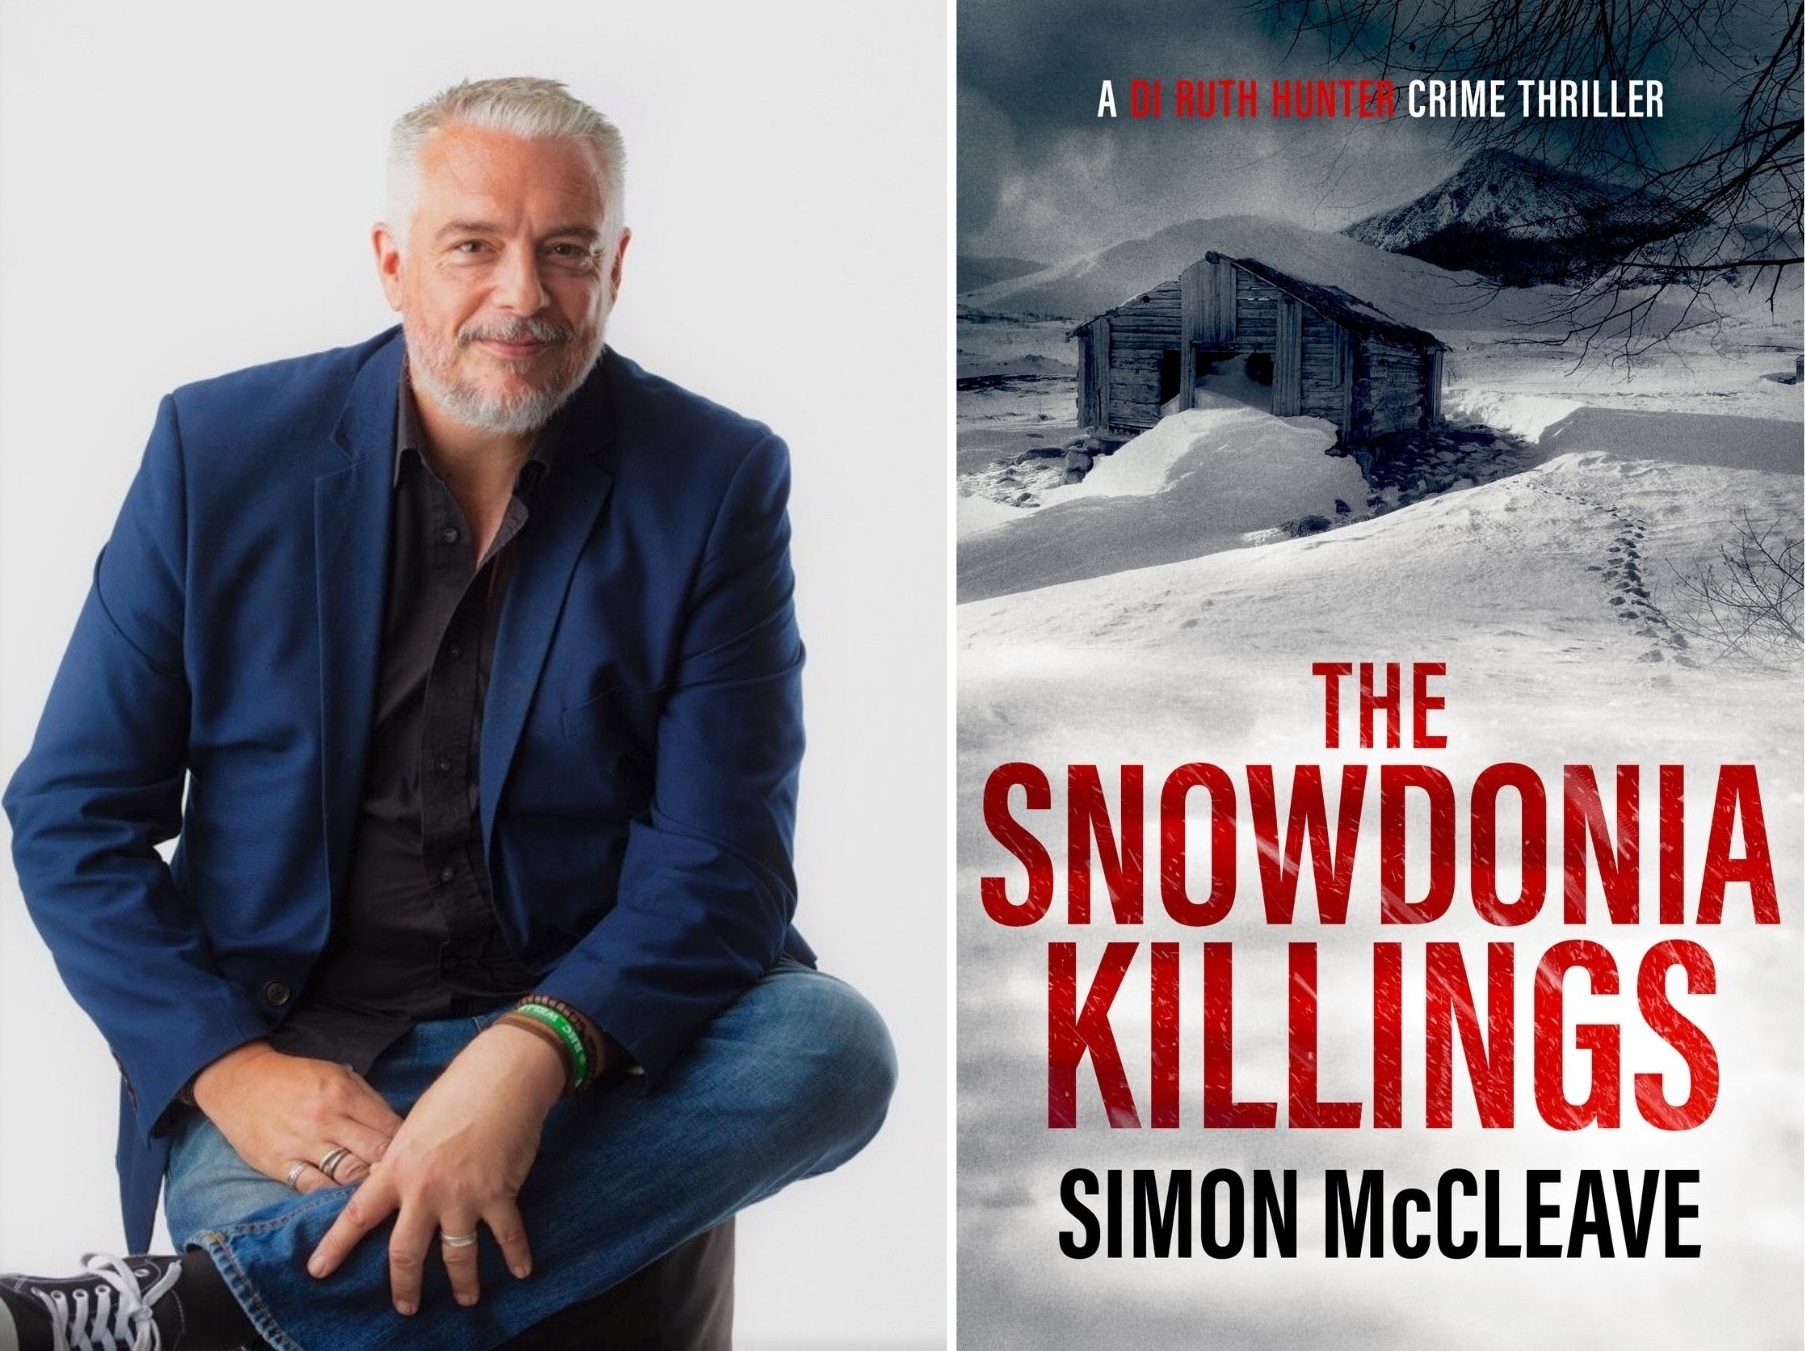 Simon McCleave, author of The Snowdonia Killings.